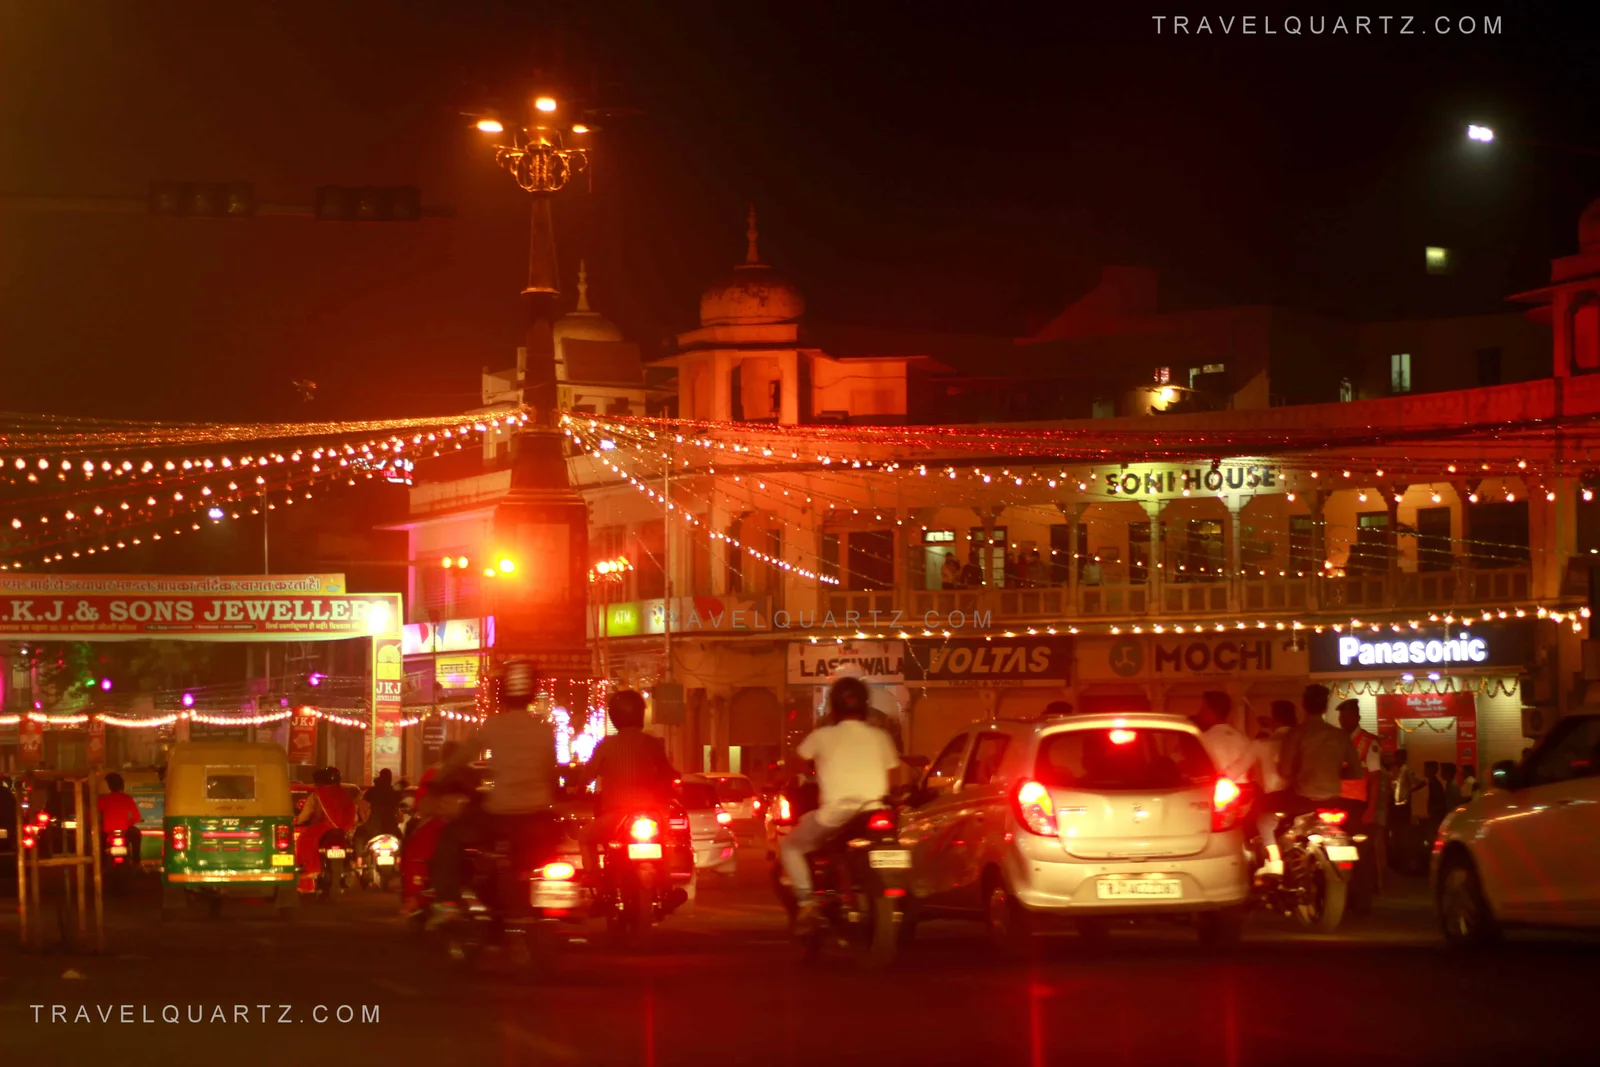 Diwali festival at Pink City Jaipur